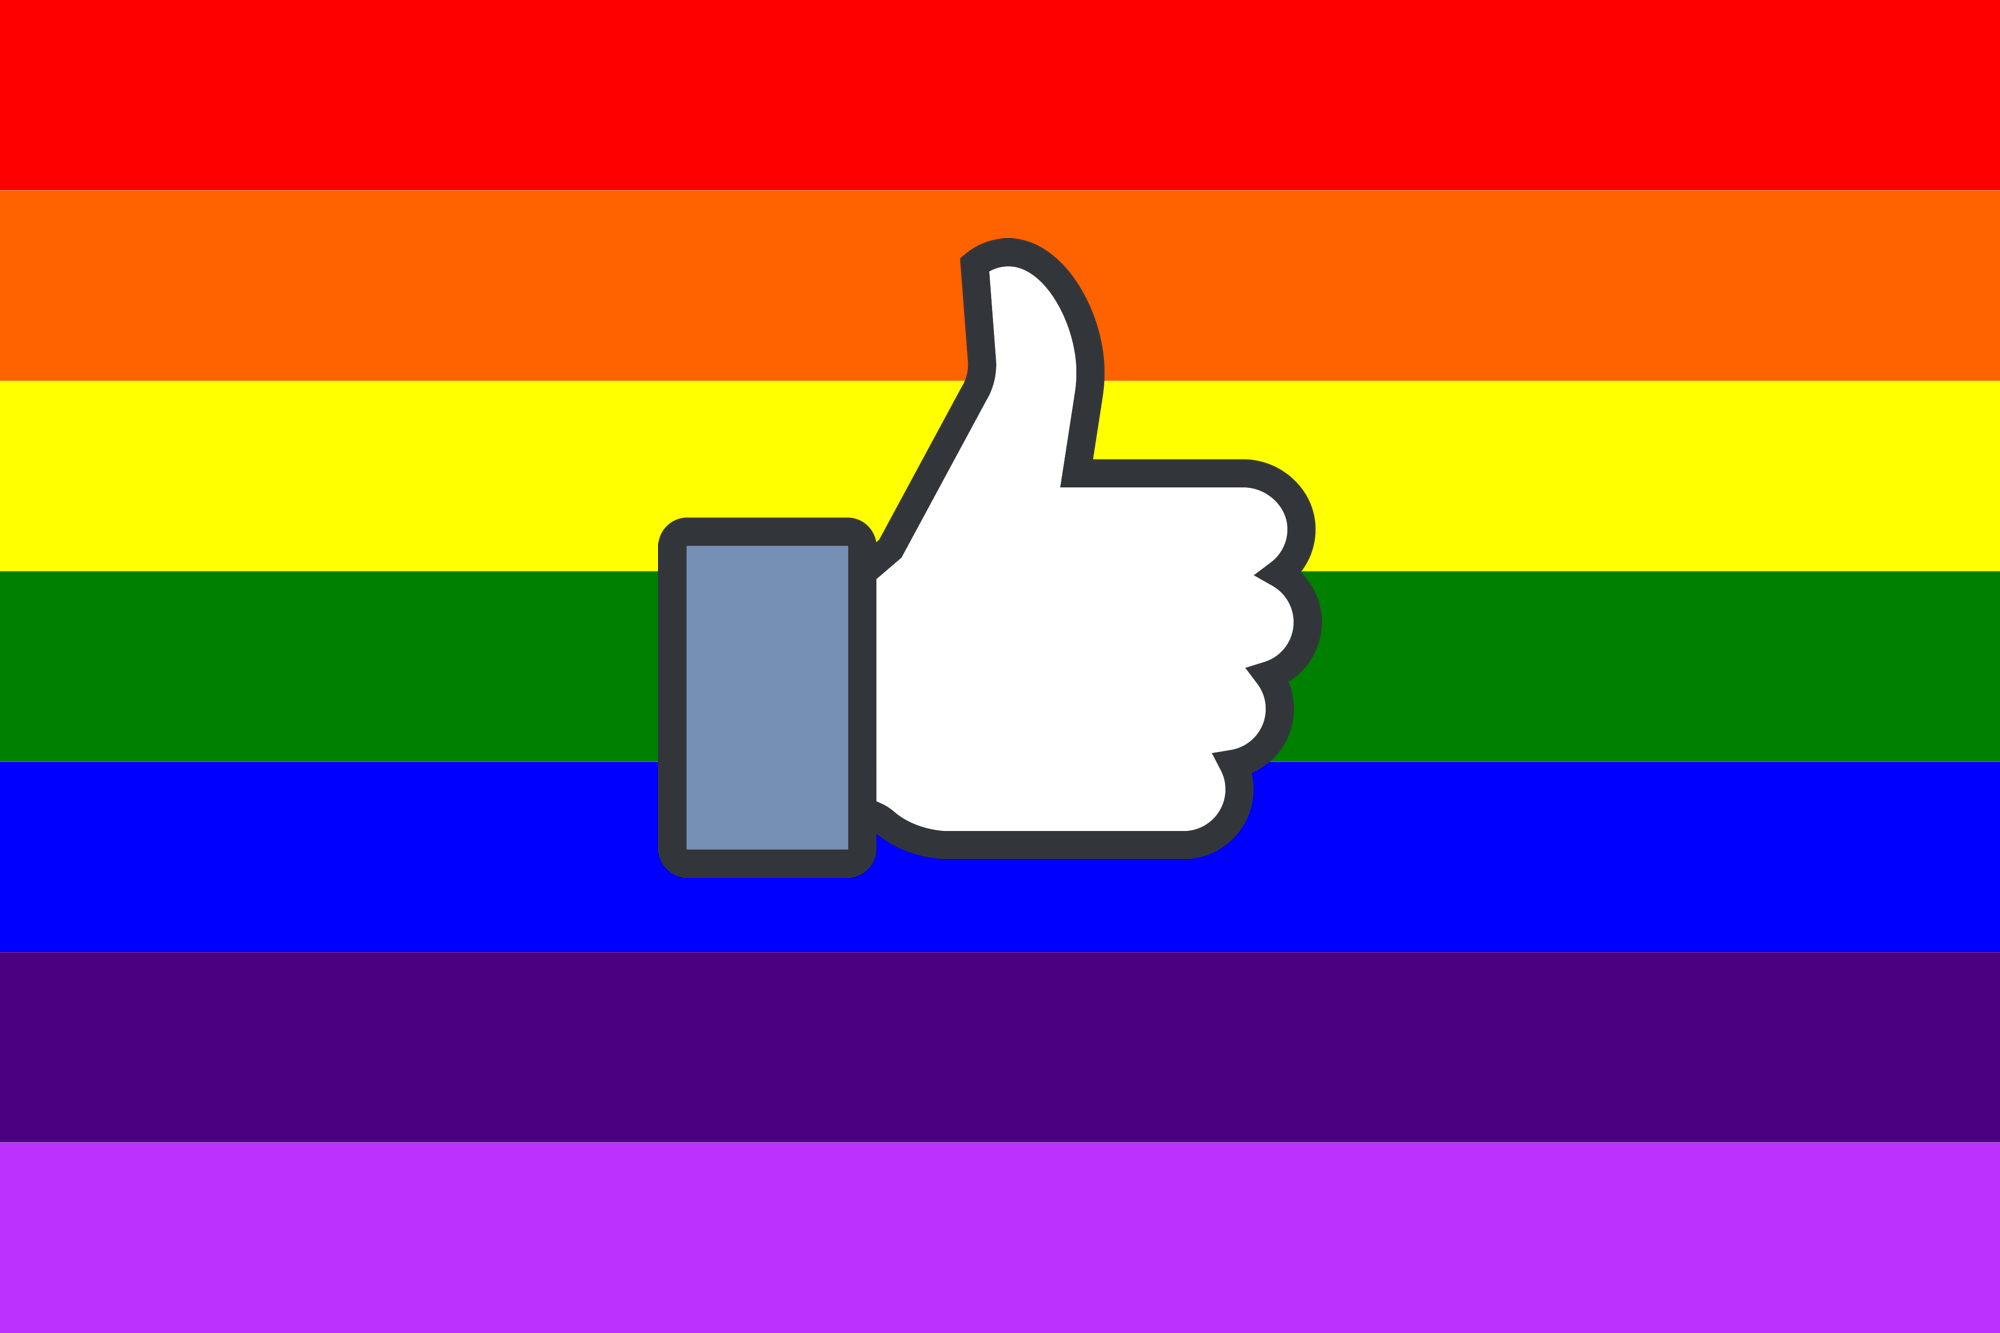 gay pride flag emoji for facebook